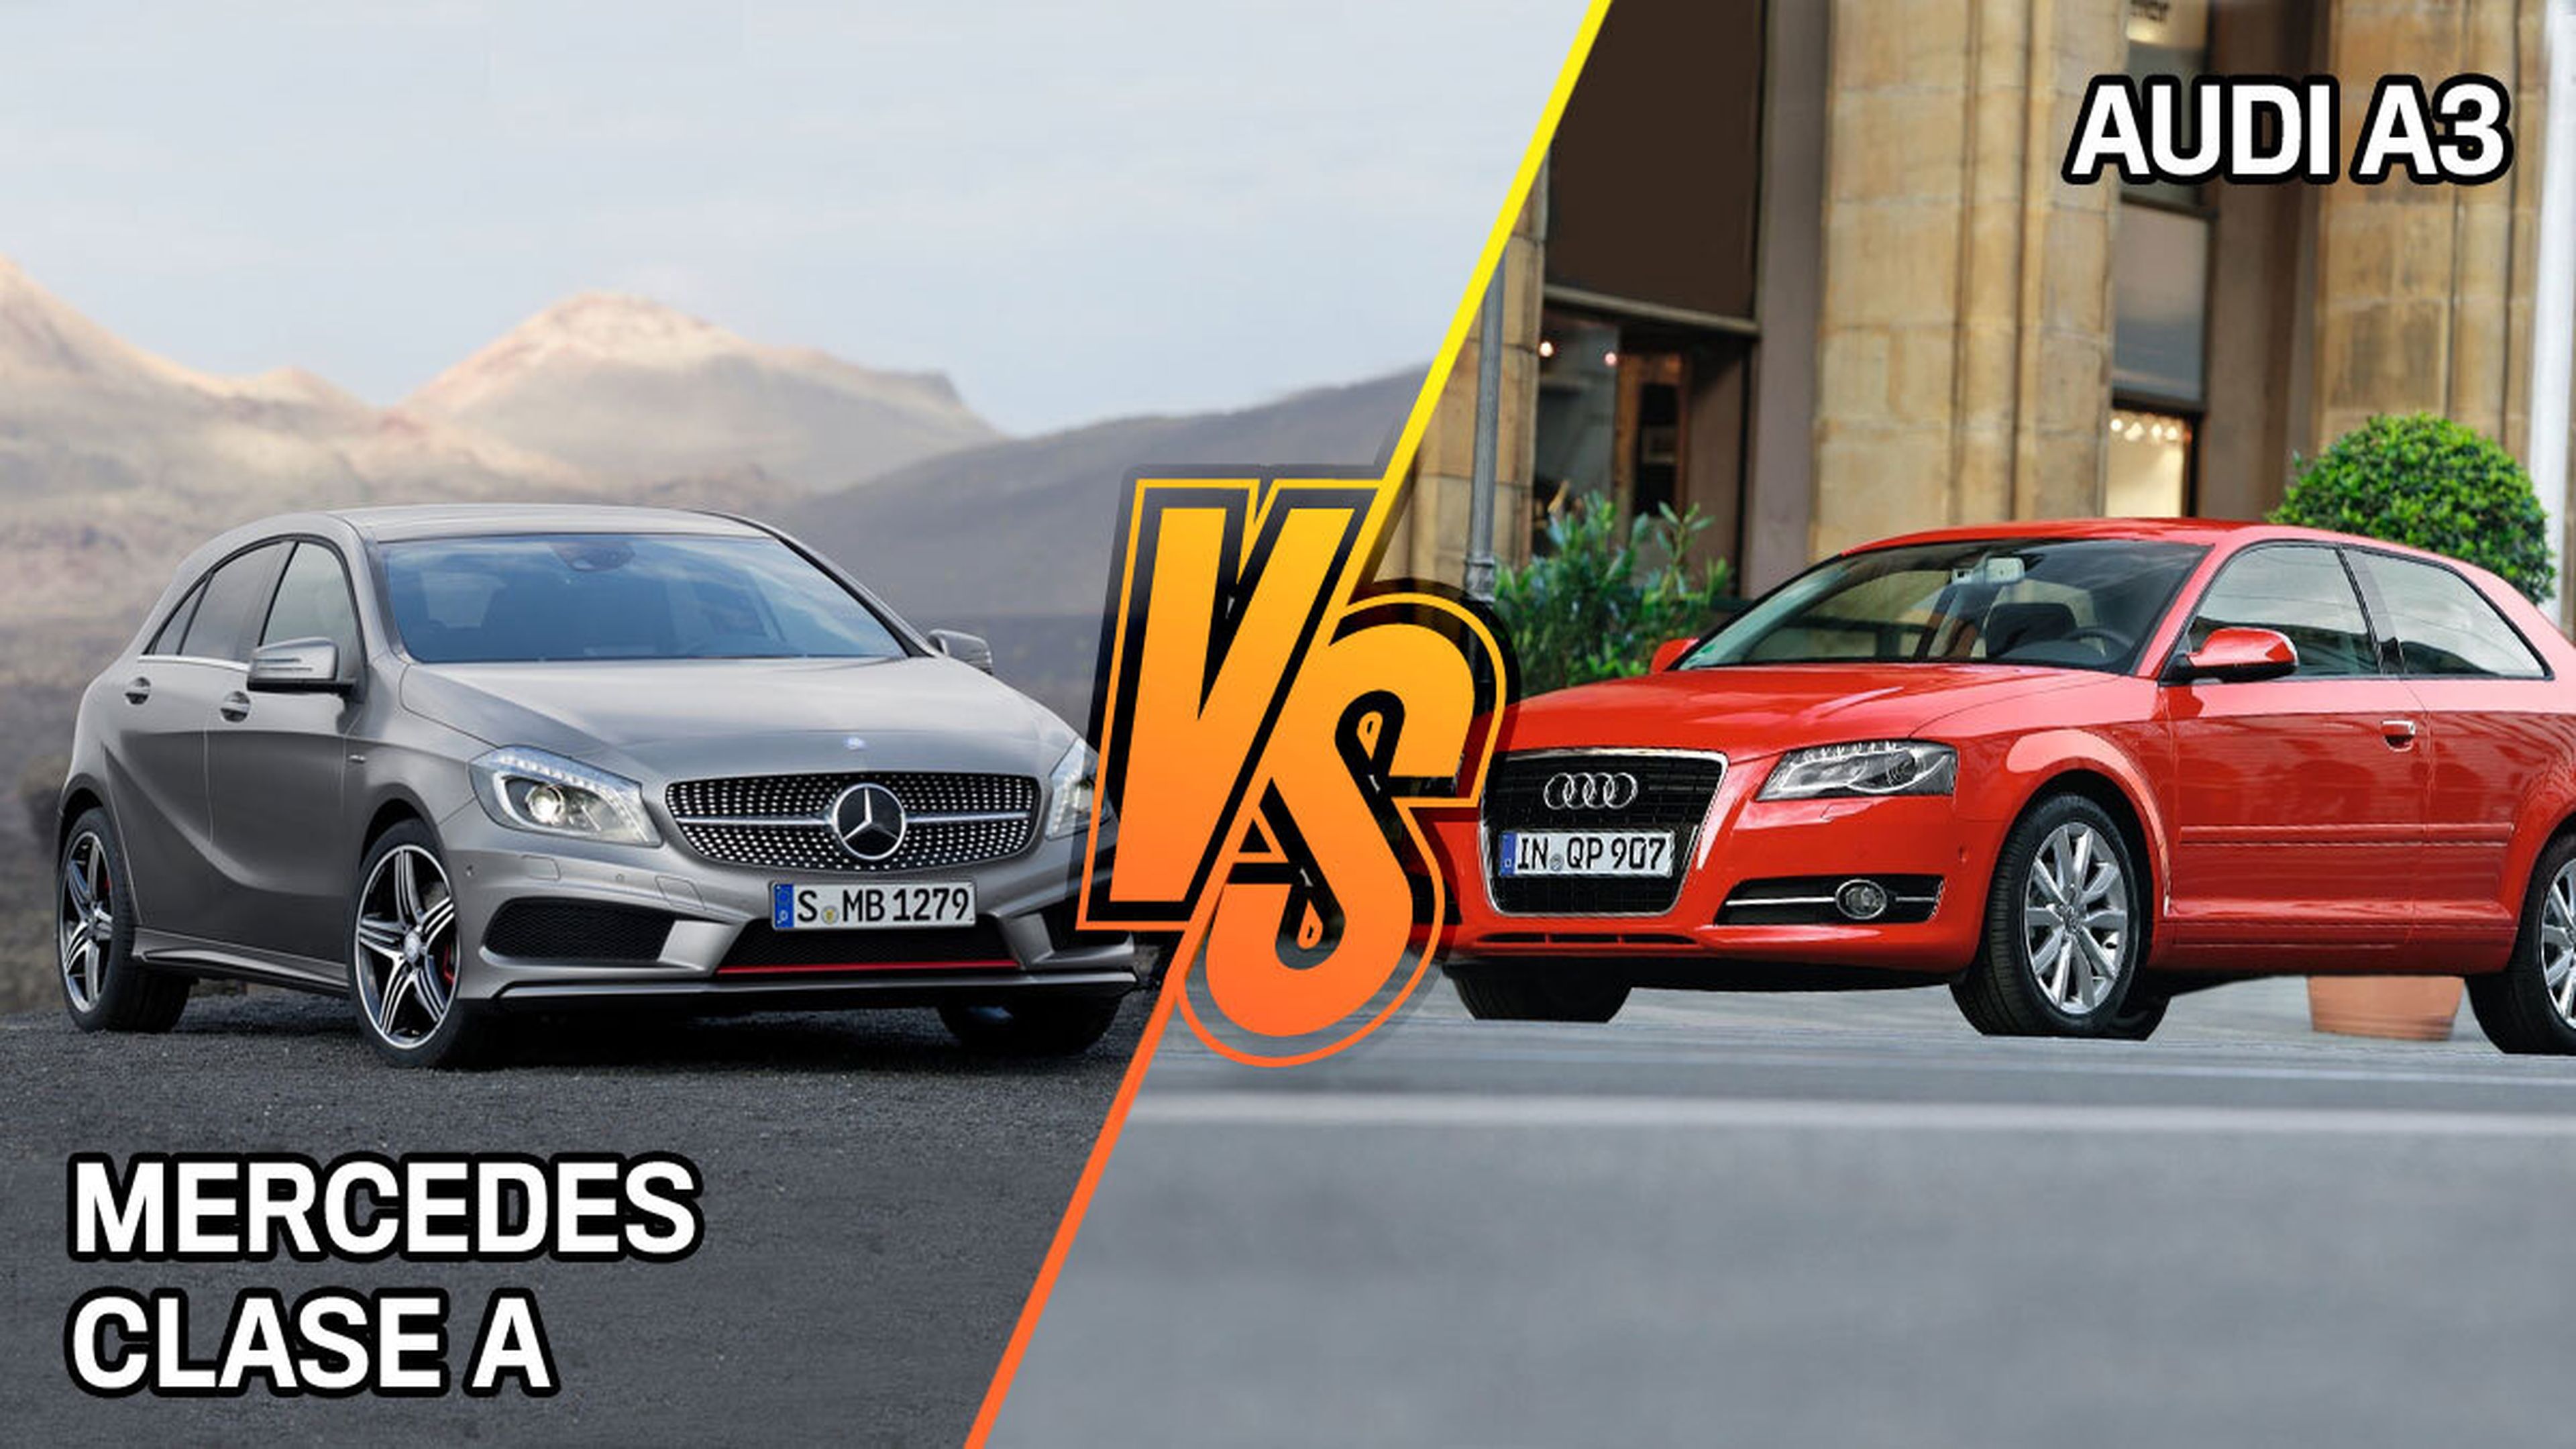 Audi A3 o Mercedes Clase A de segunda mano, ¿cuál es mejor opción de compra?